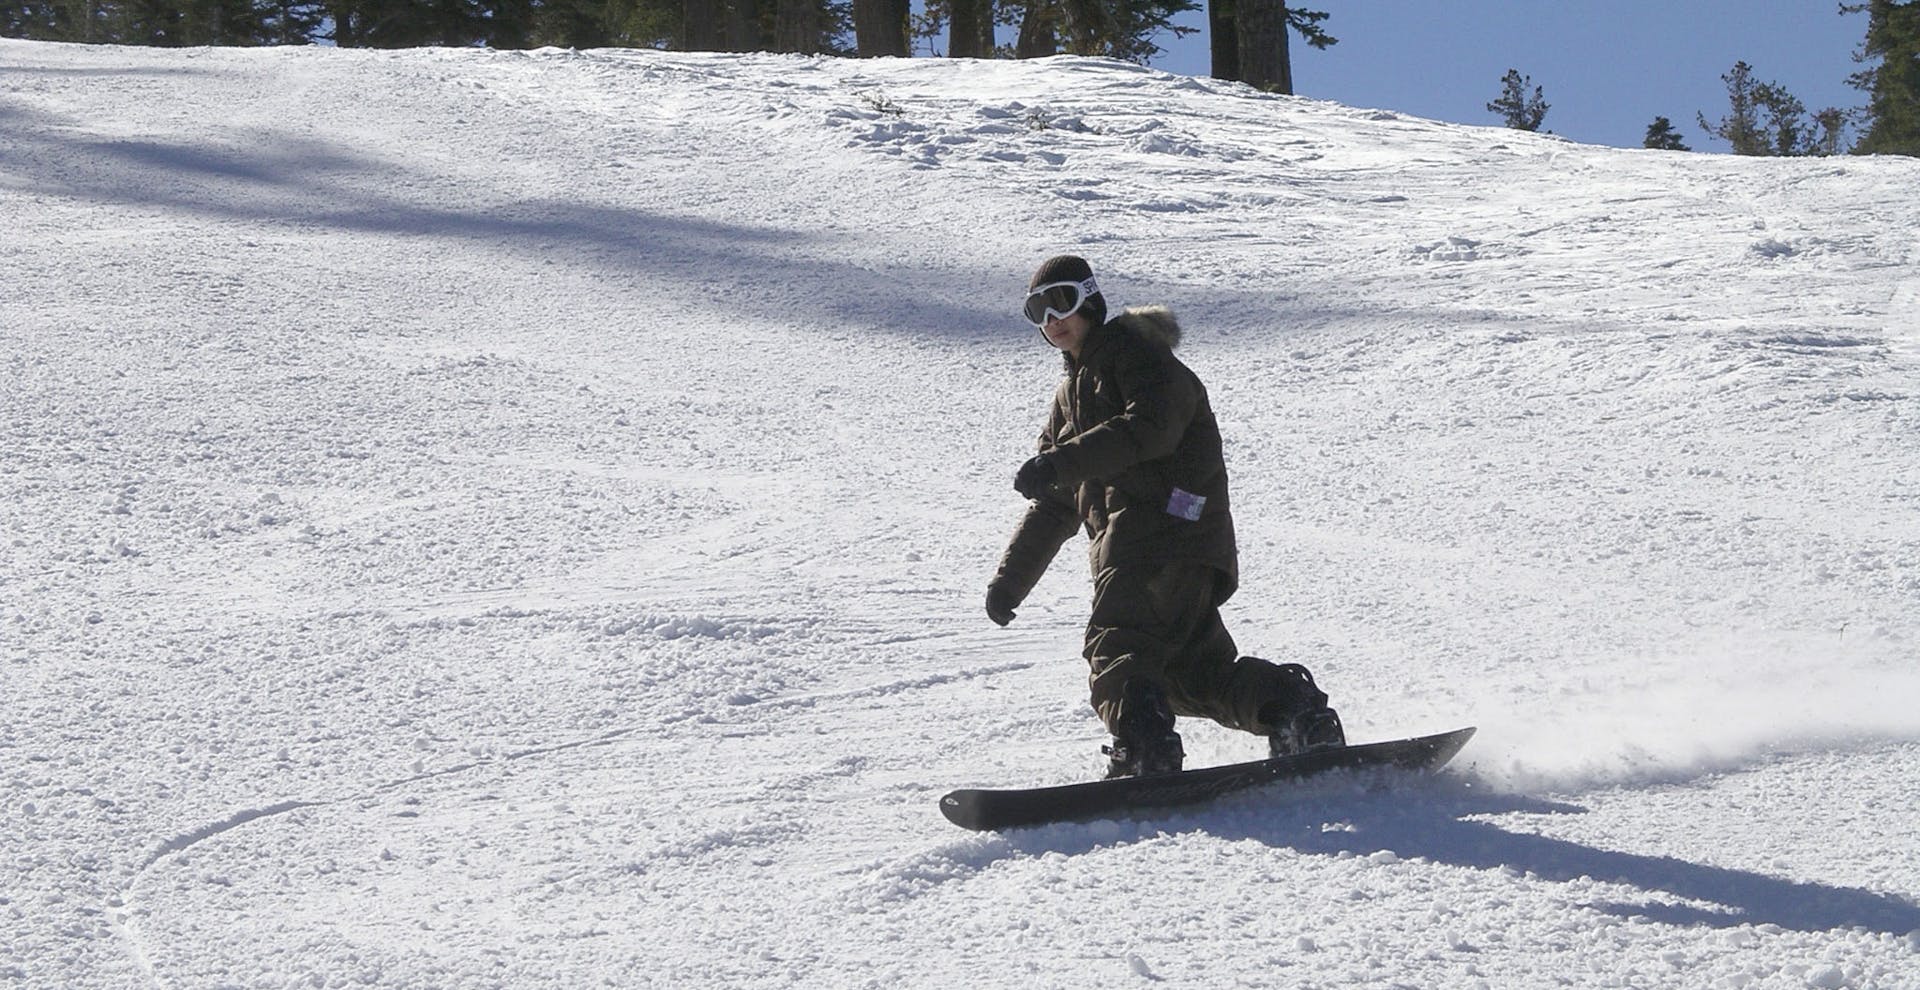 Snowboarding at Northstar California